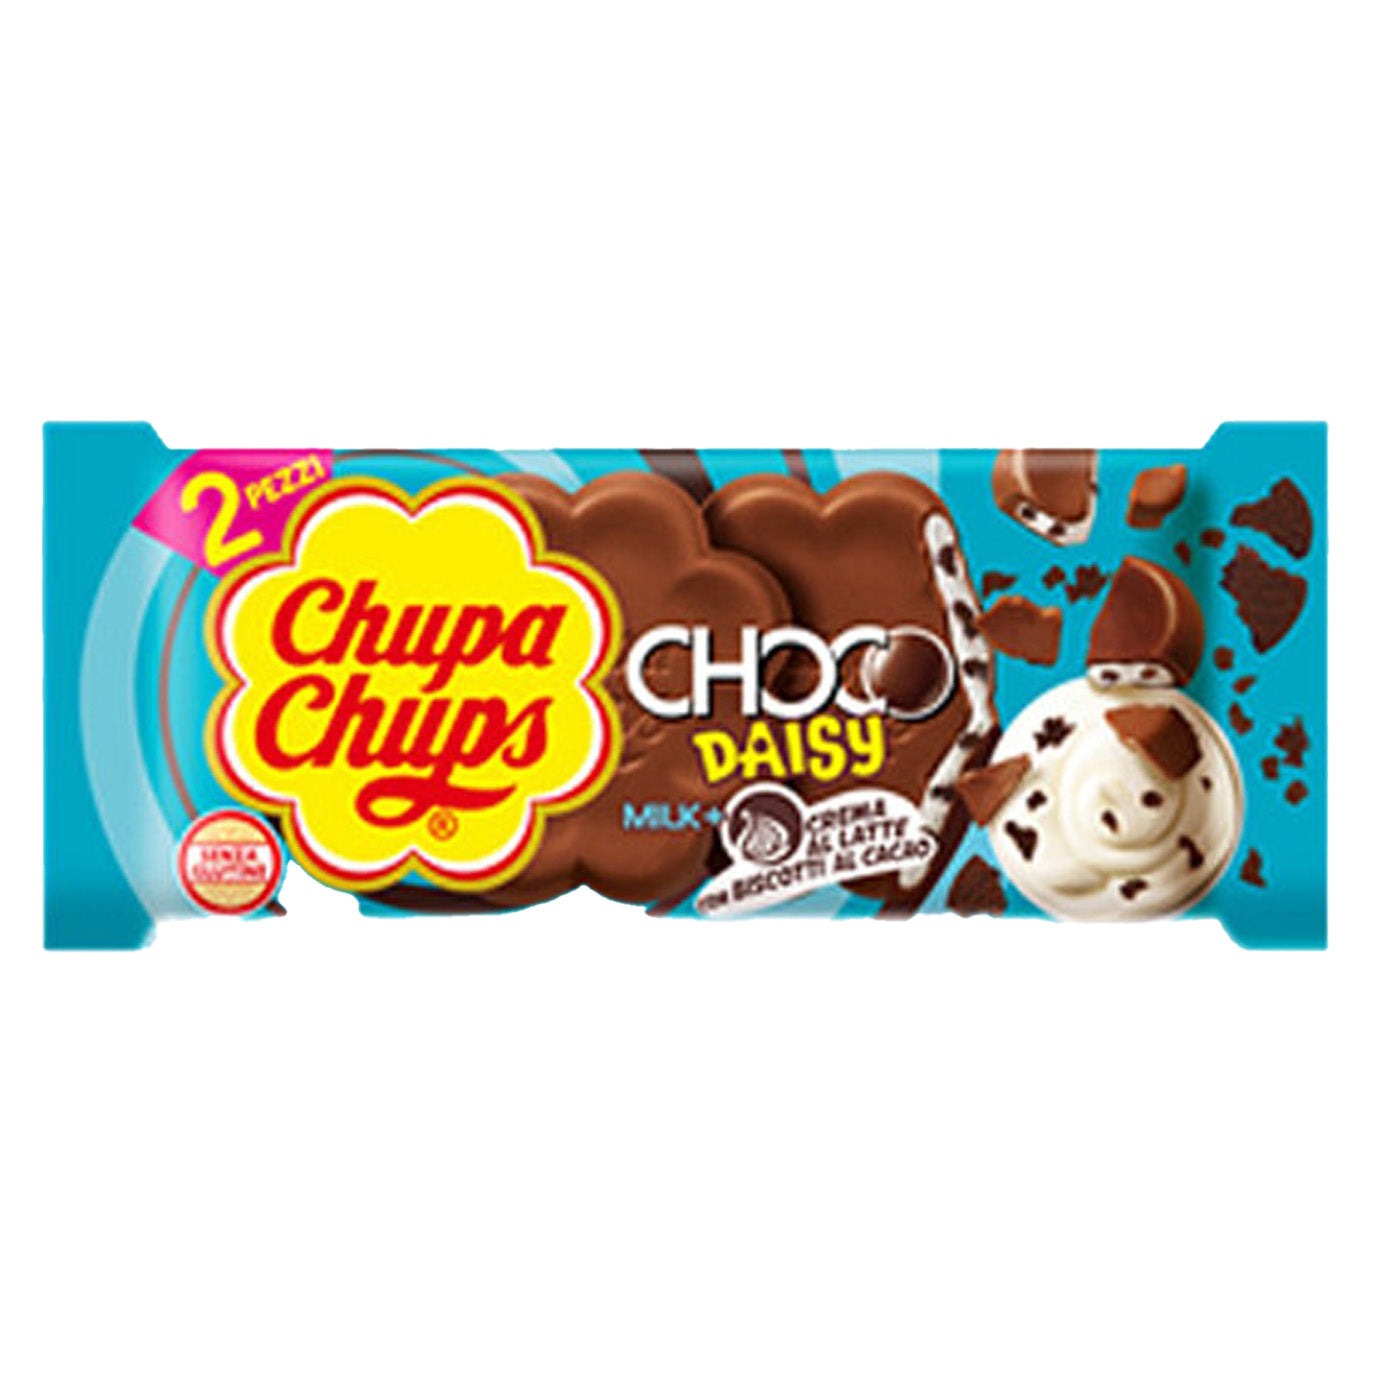 Chupa Chups Choco Daisy Creama Biscotti | 20 x 32g